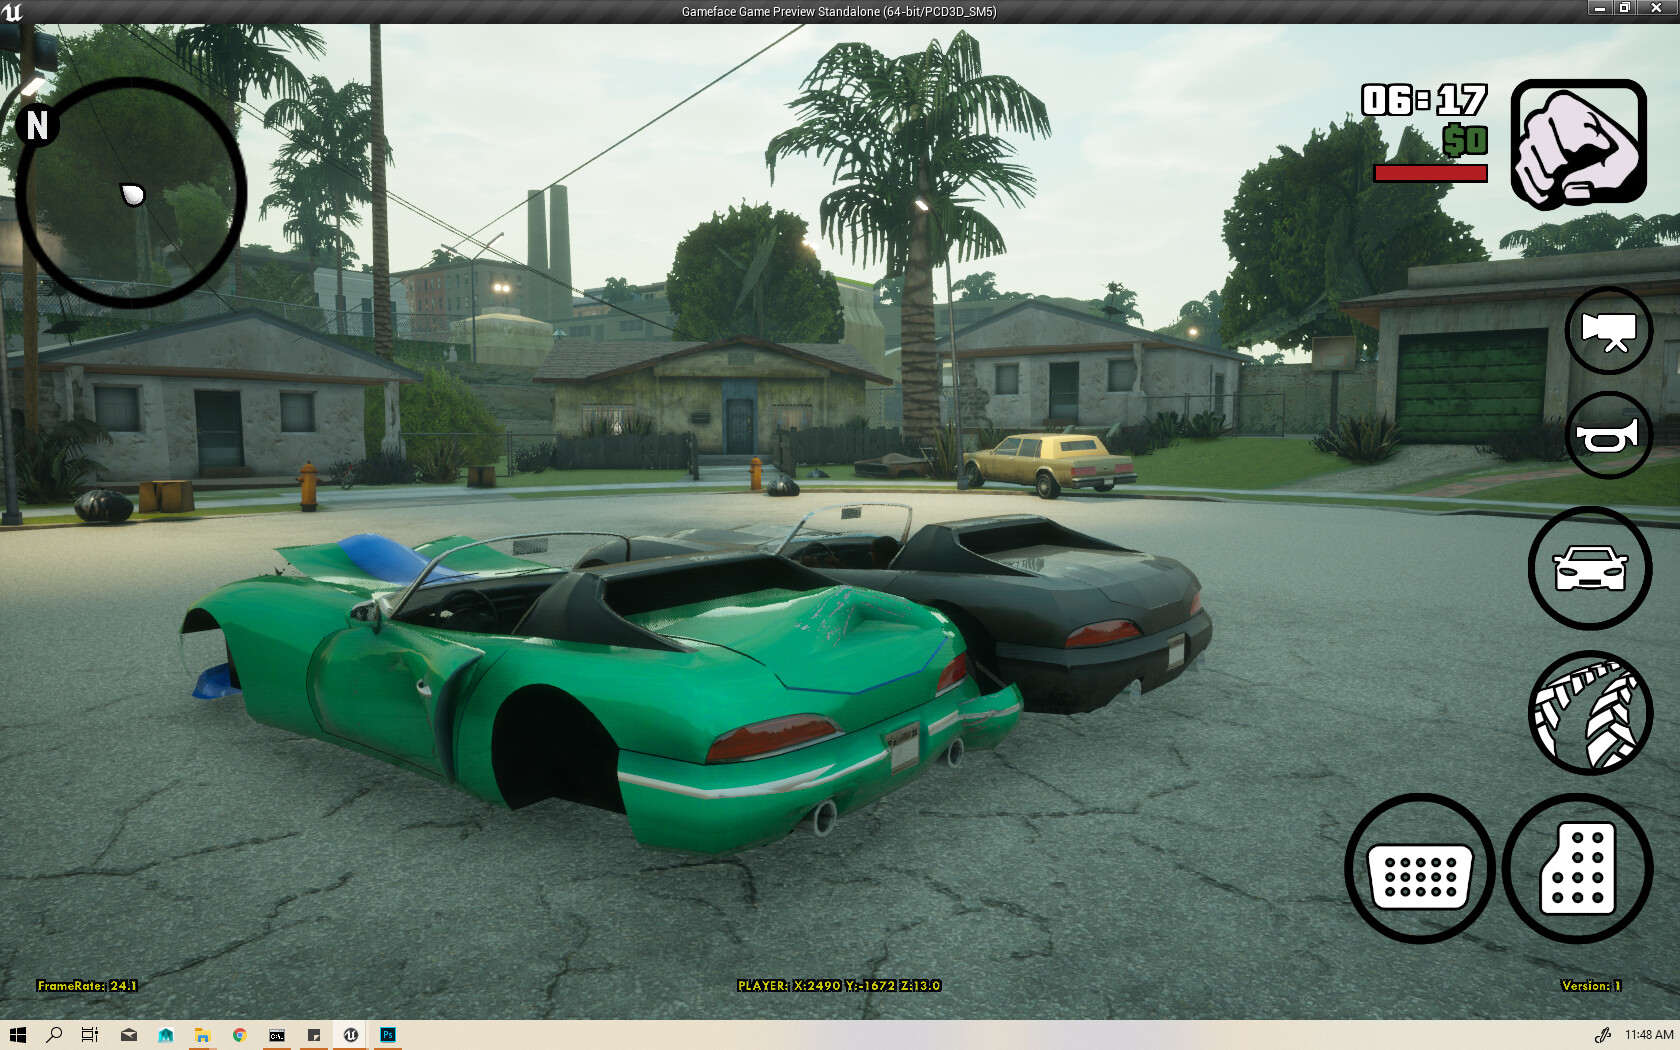 GTA: The Trilogy Premature Build Screenshot From GTA: San Andreas